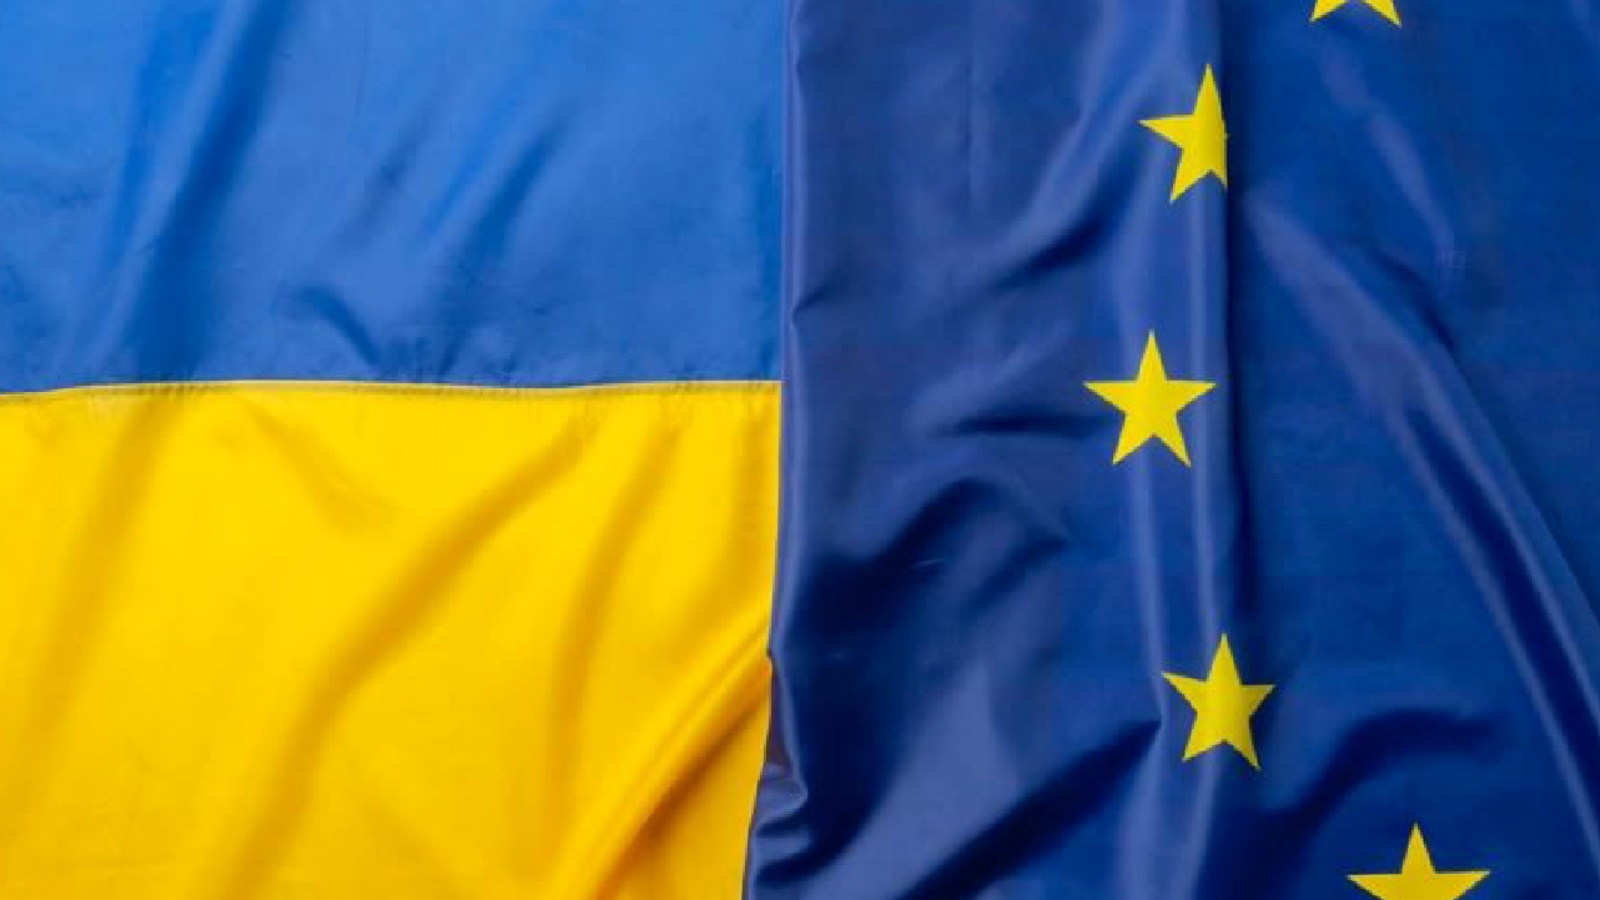 Comisia Europeana acorda ajutor inca 1 miliard euro Ucrainei